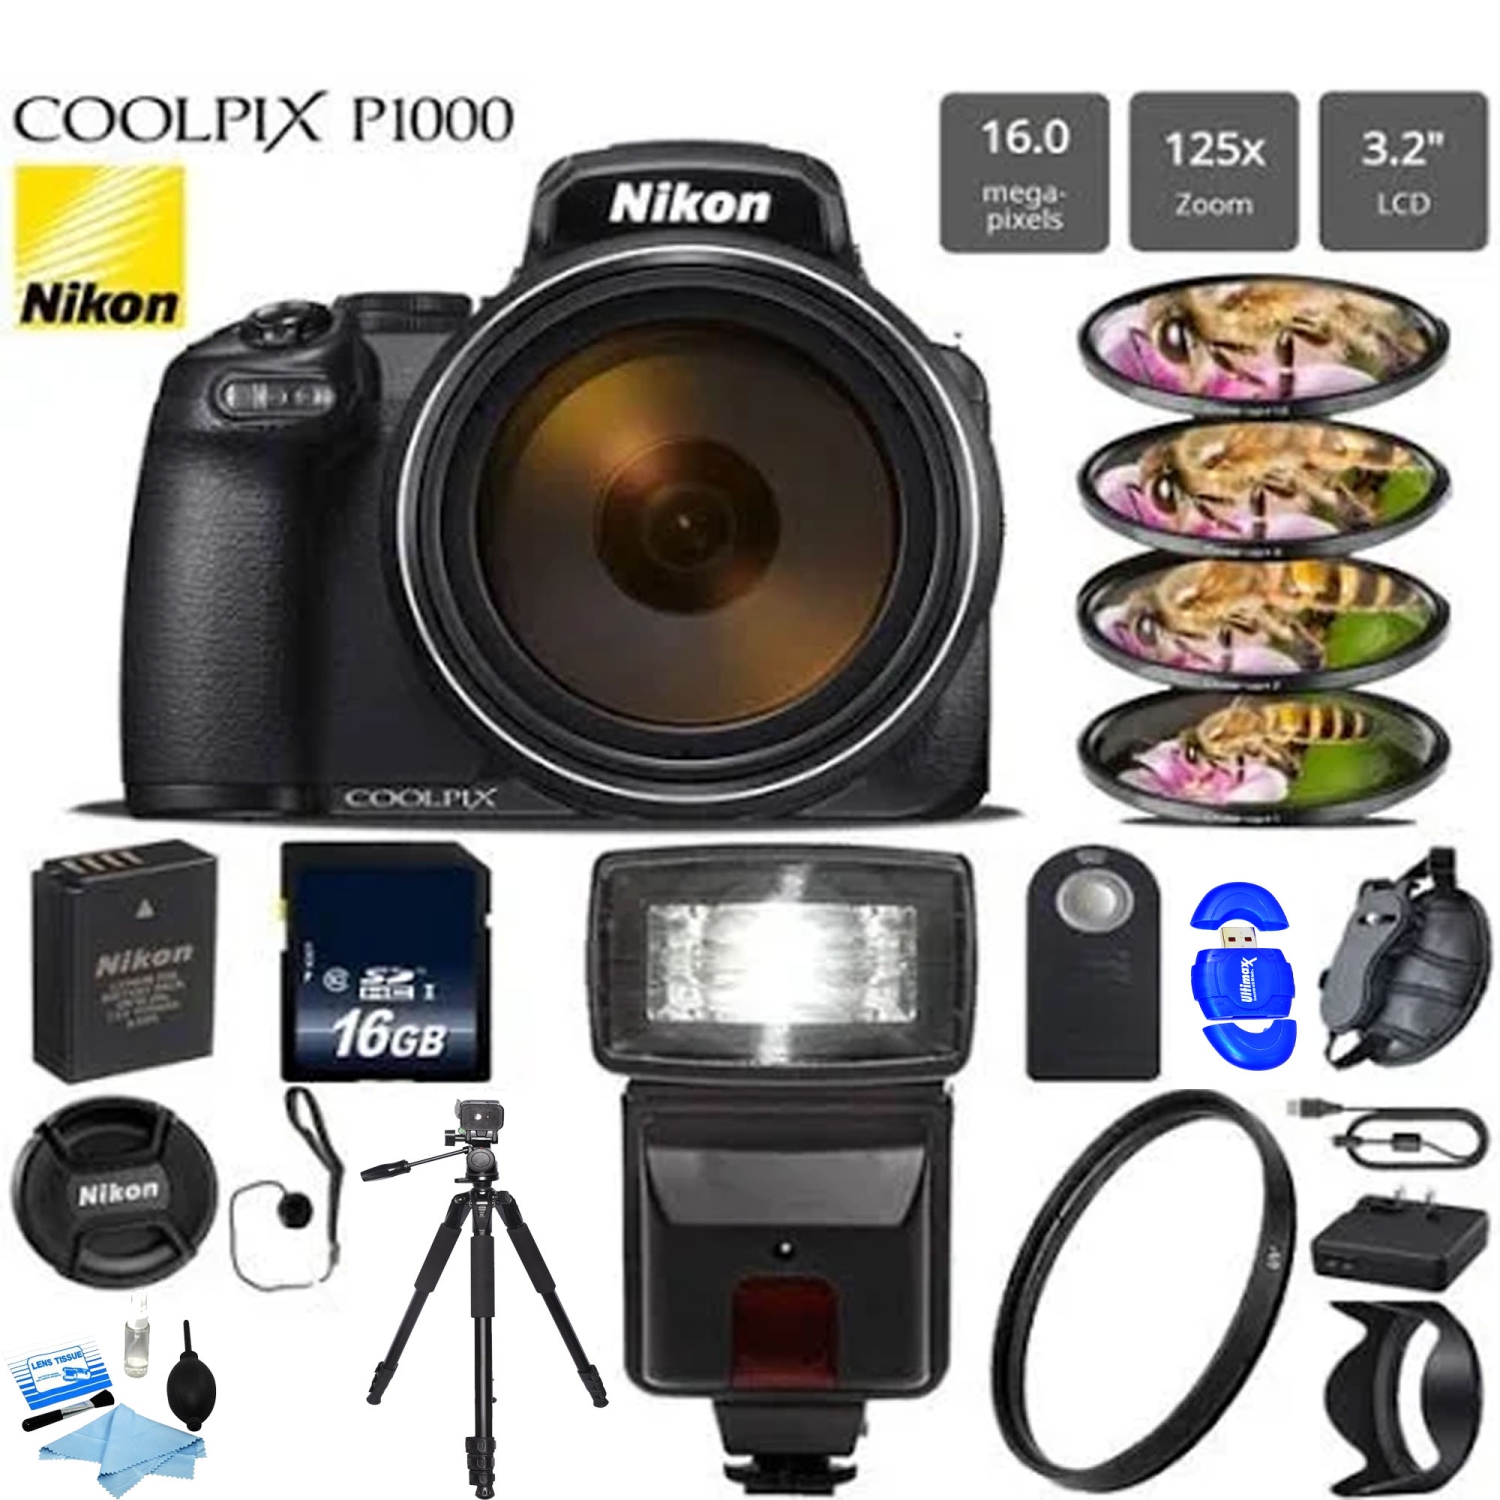 Nikon COOLPIX P1000 Digital Camera w/ Professional Flash | 16GB MC | Tripod | Filters & More - US Version w/ Seller Warranty